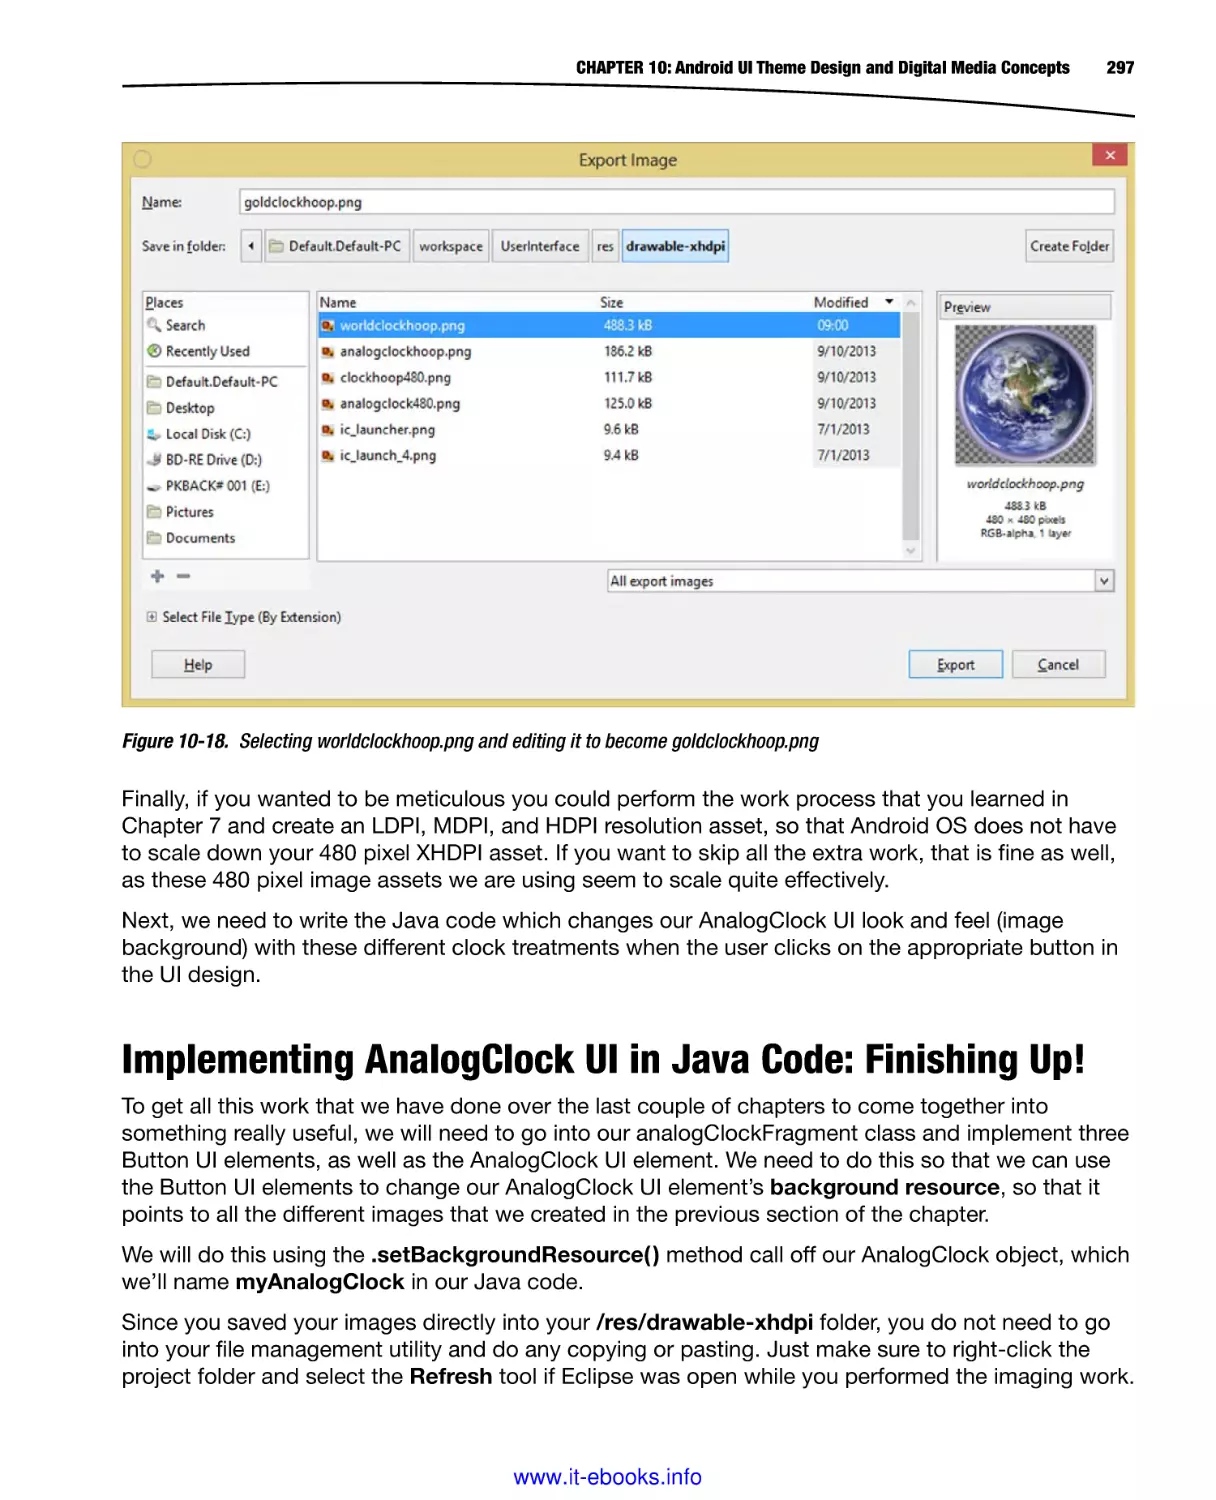 Implementing AnalogClock UI in Java Code